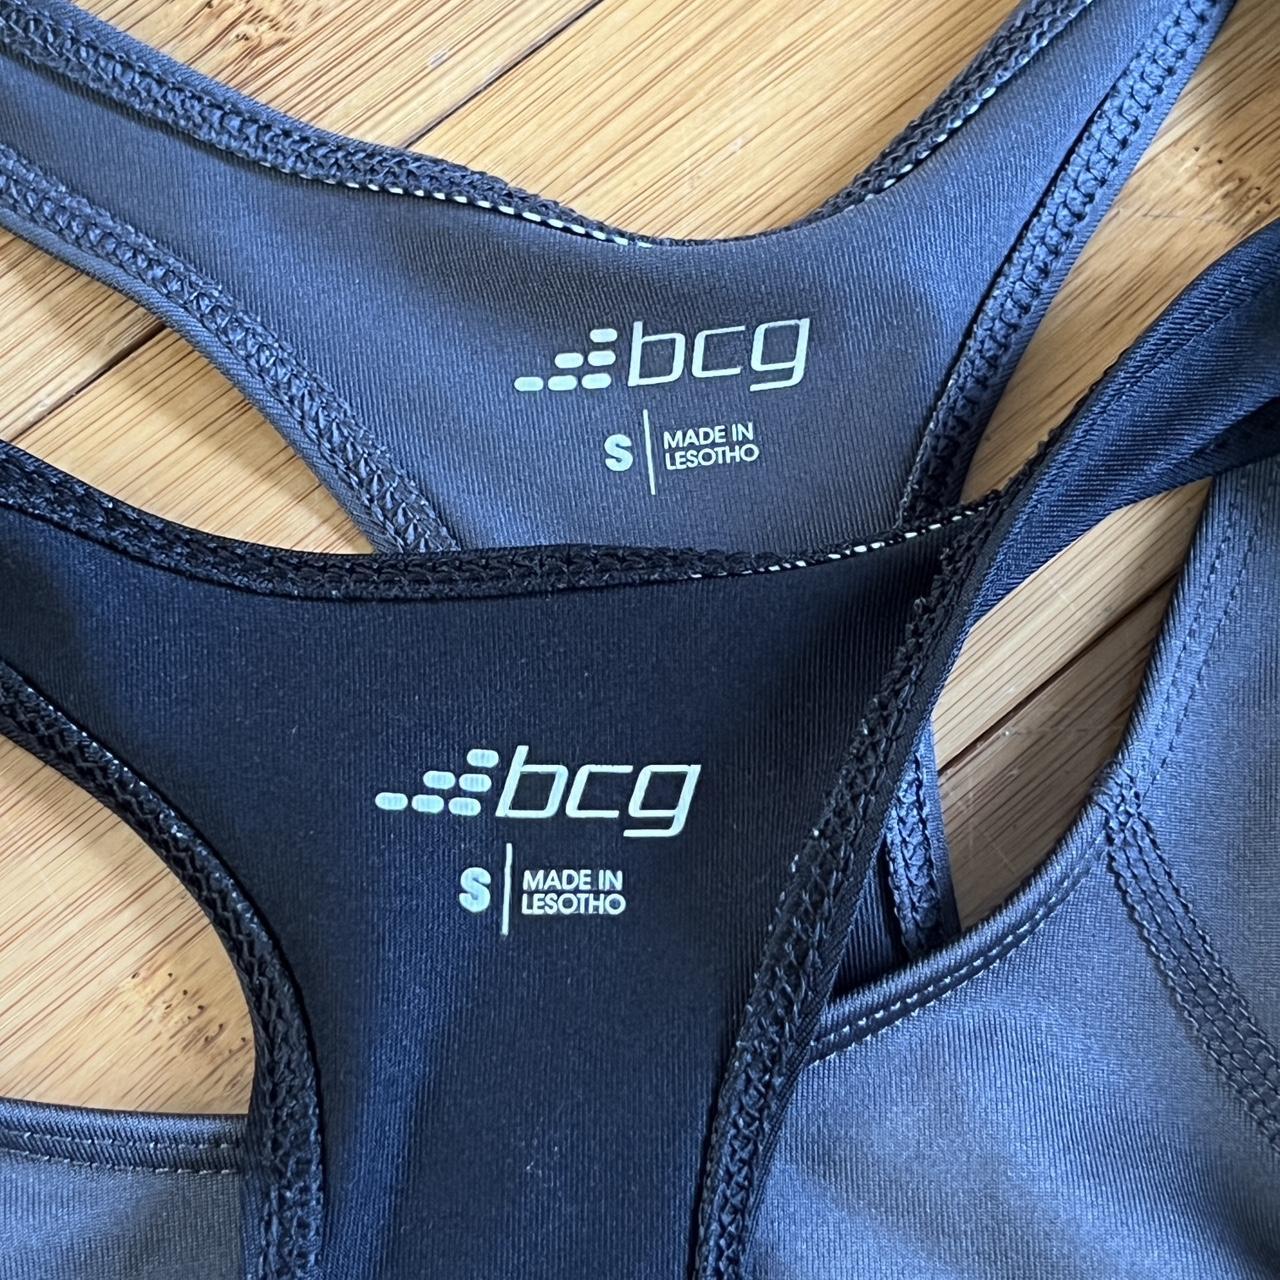 BCG sports bra. Color - grey + blue pattern. Worn, - Depop